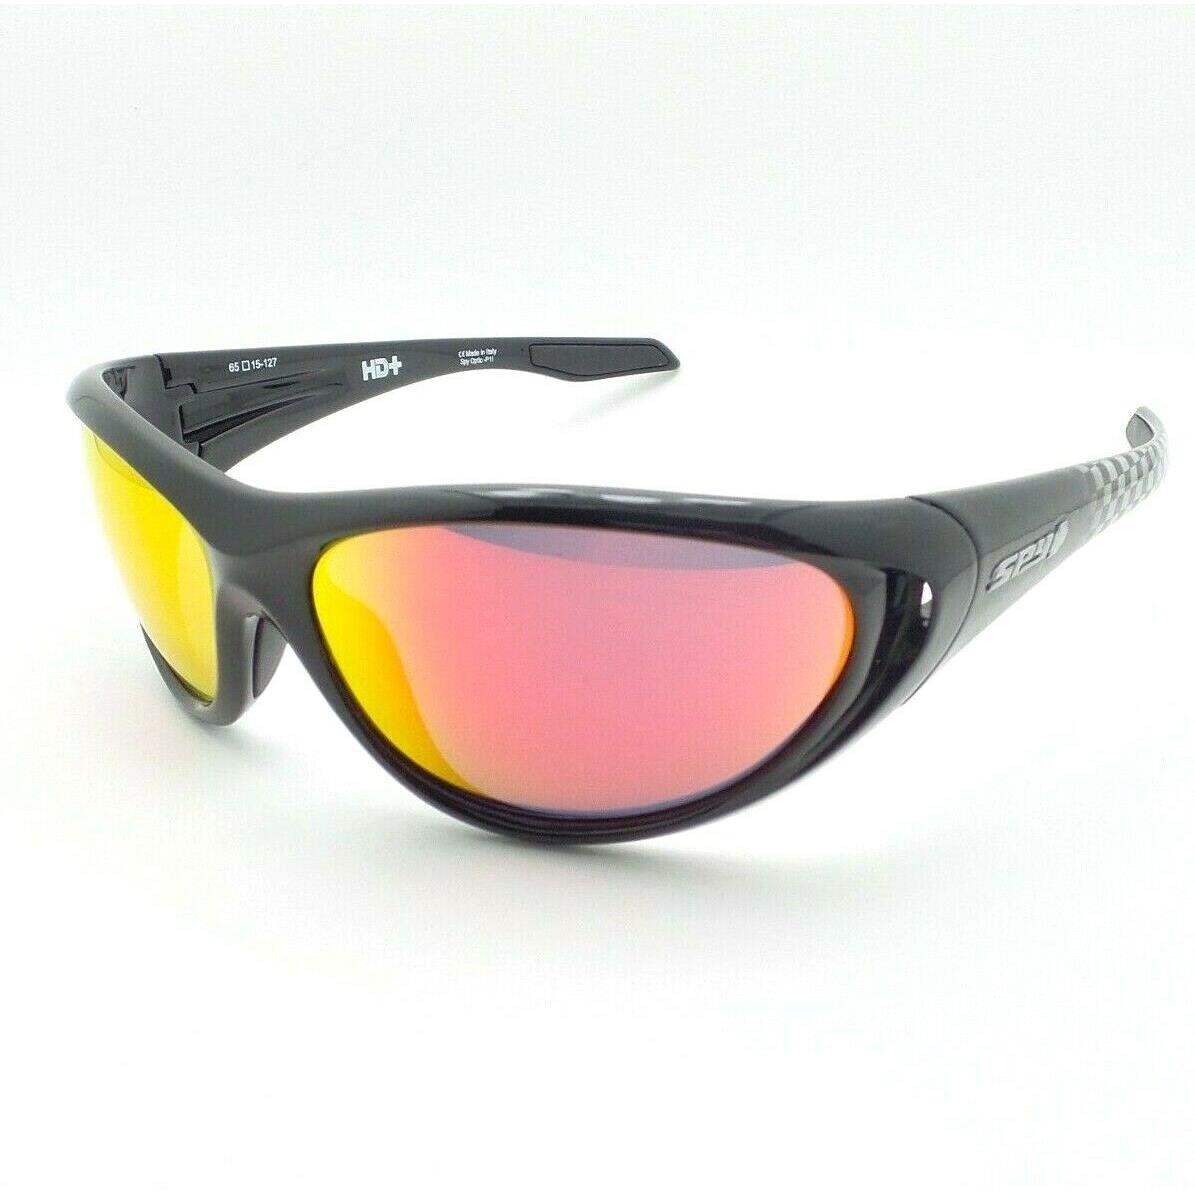 Spy Optics Scoop 2 Black Check Hd+ Red Spectra Mirror Sunglasses